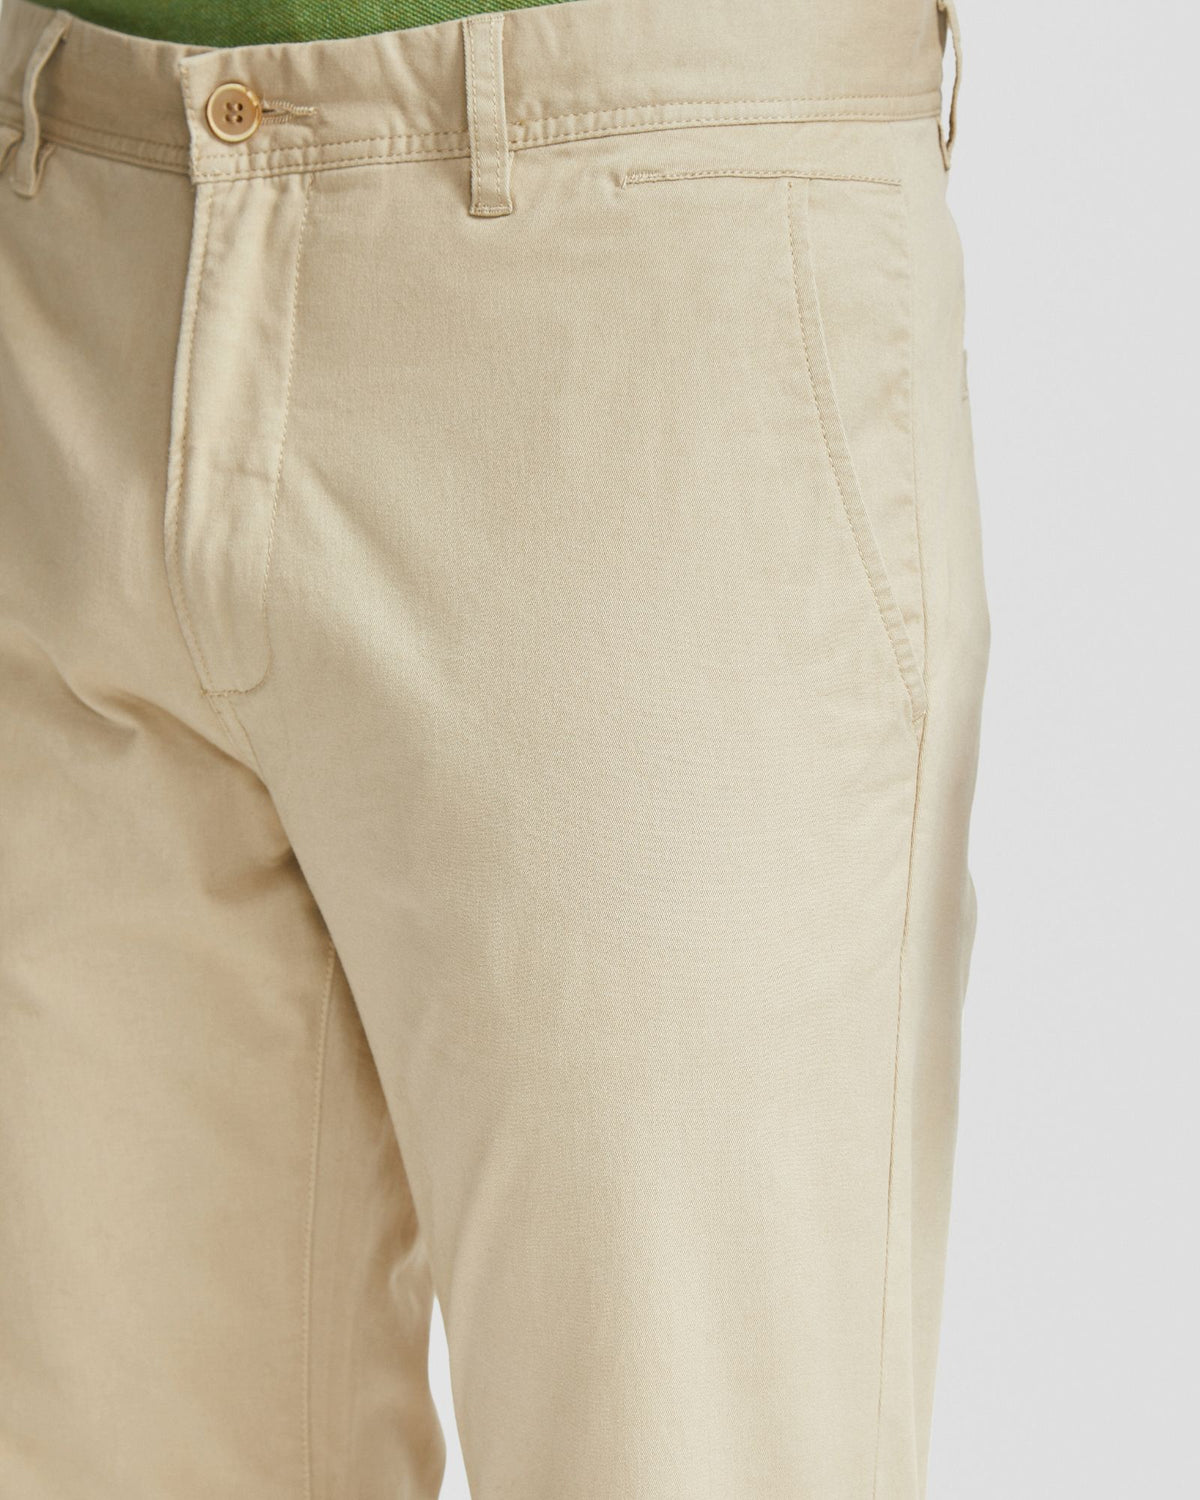 Lauren Ralph Lauren Pants Women's Casual Khaki Beige Stretch Flat Front  Size 6